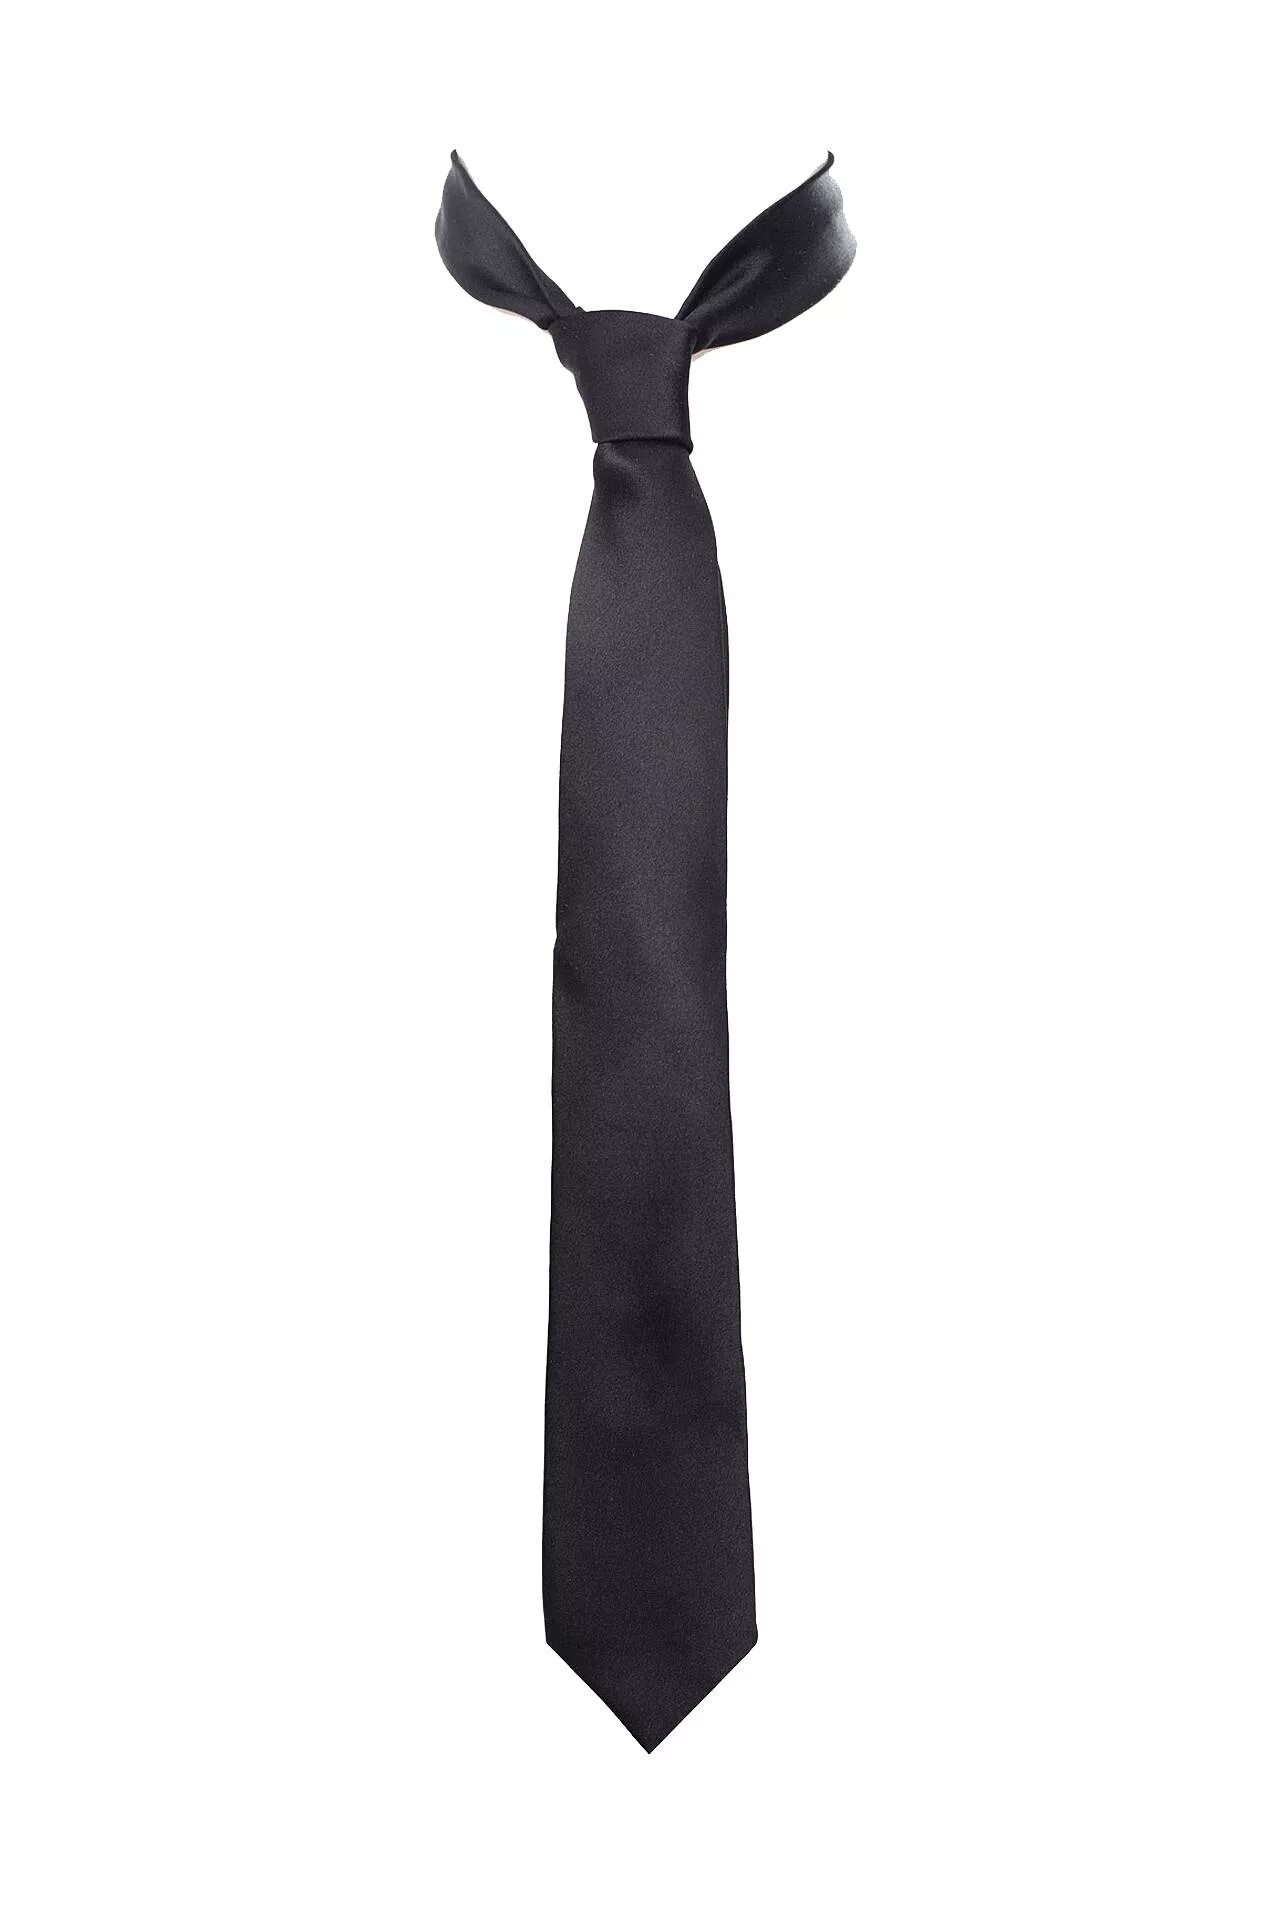 Галстук Dolce Gabbana cravatte. Галстук Westbury. Черный галстук. Галстук женский черный.